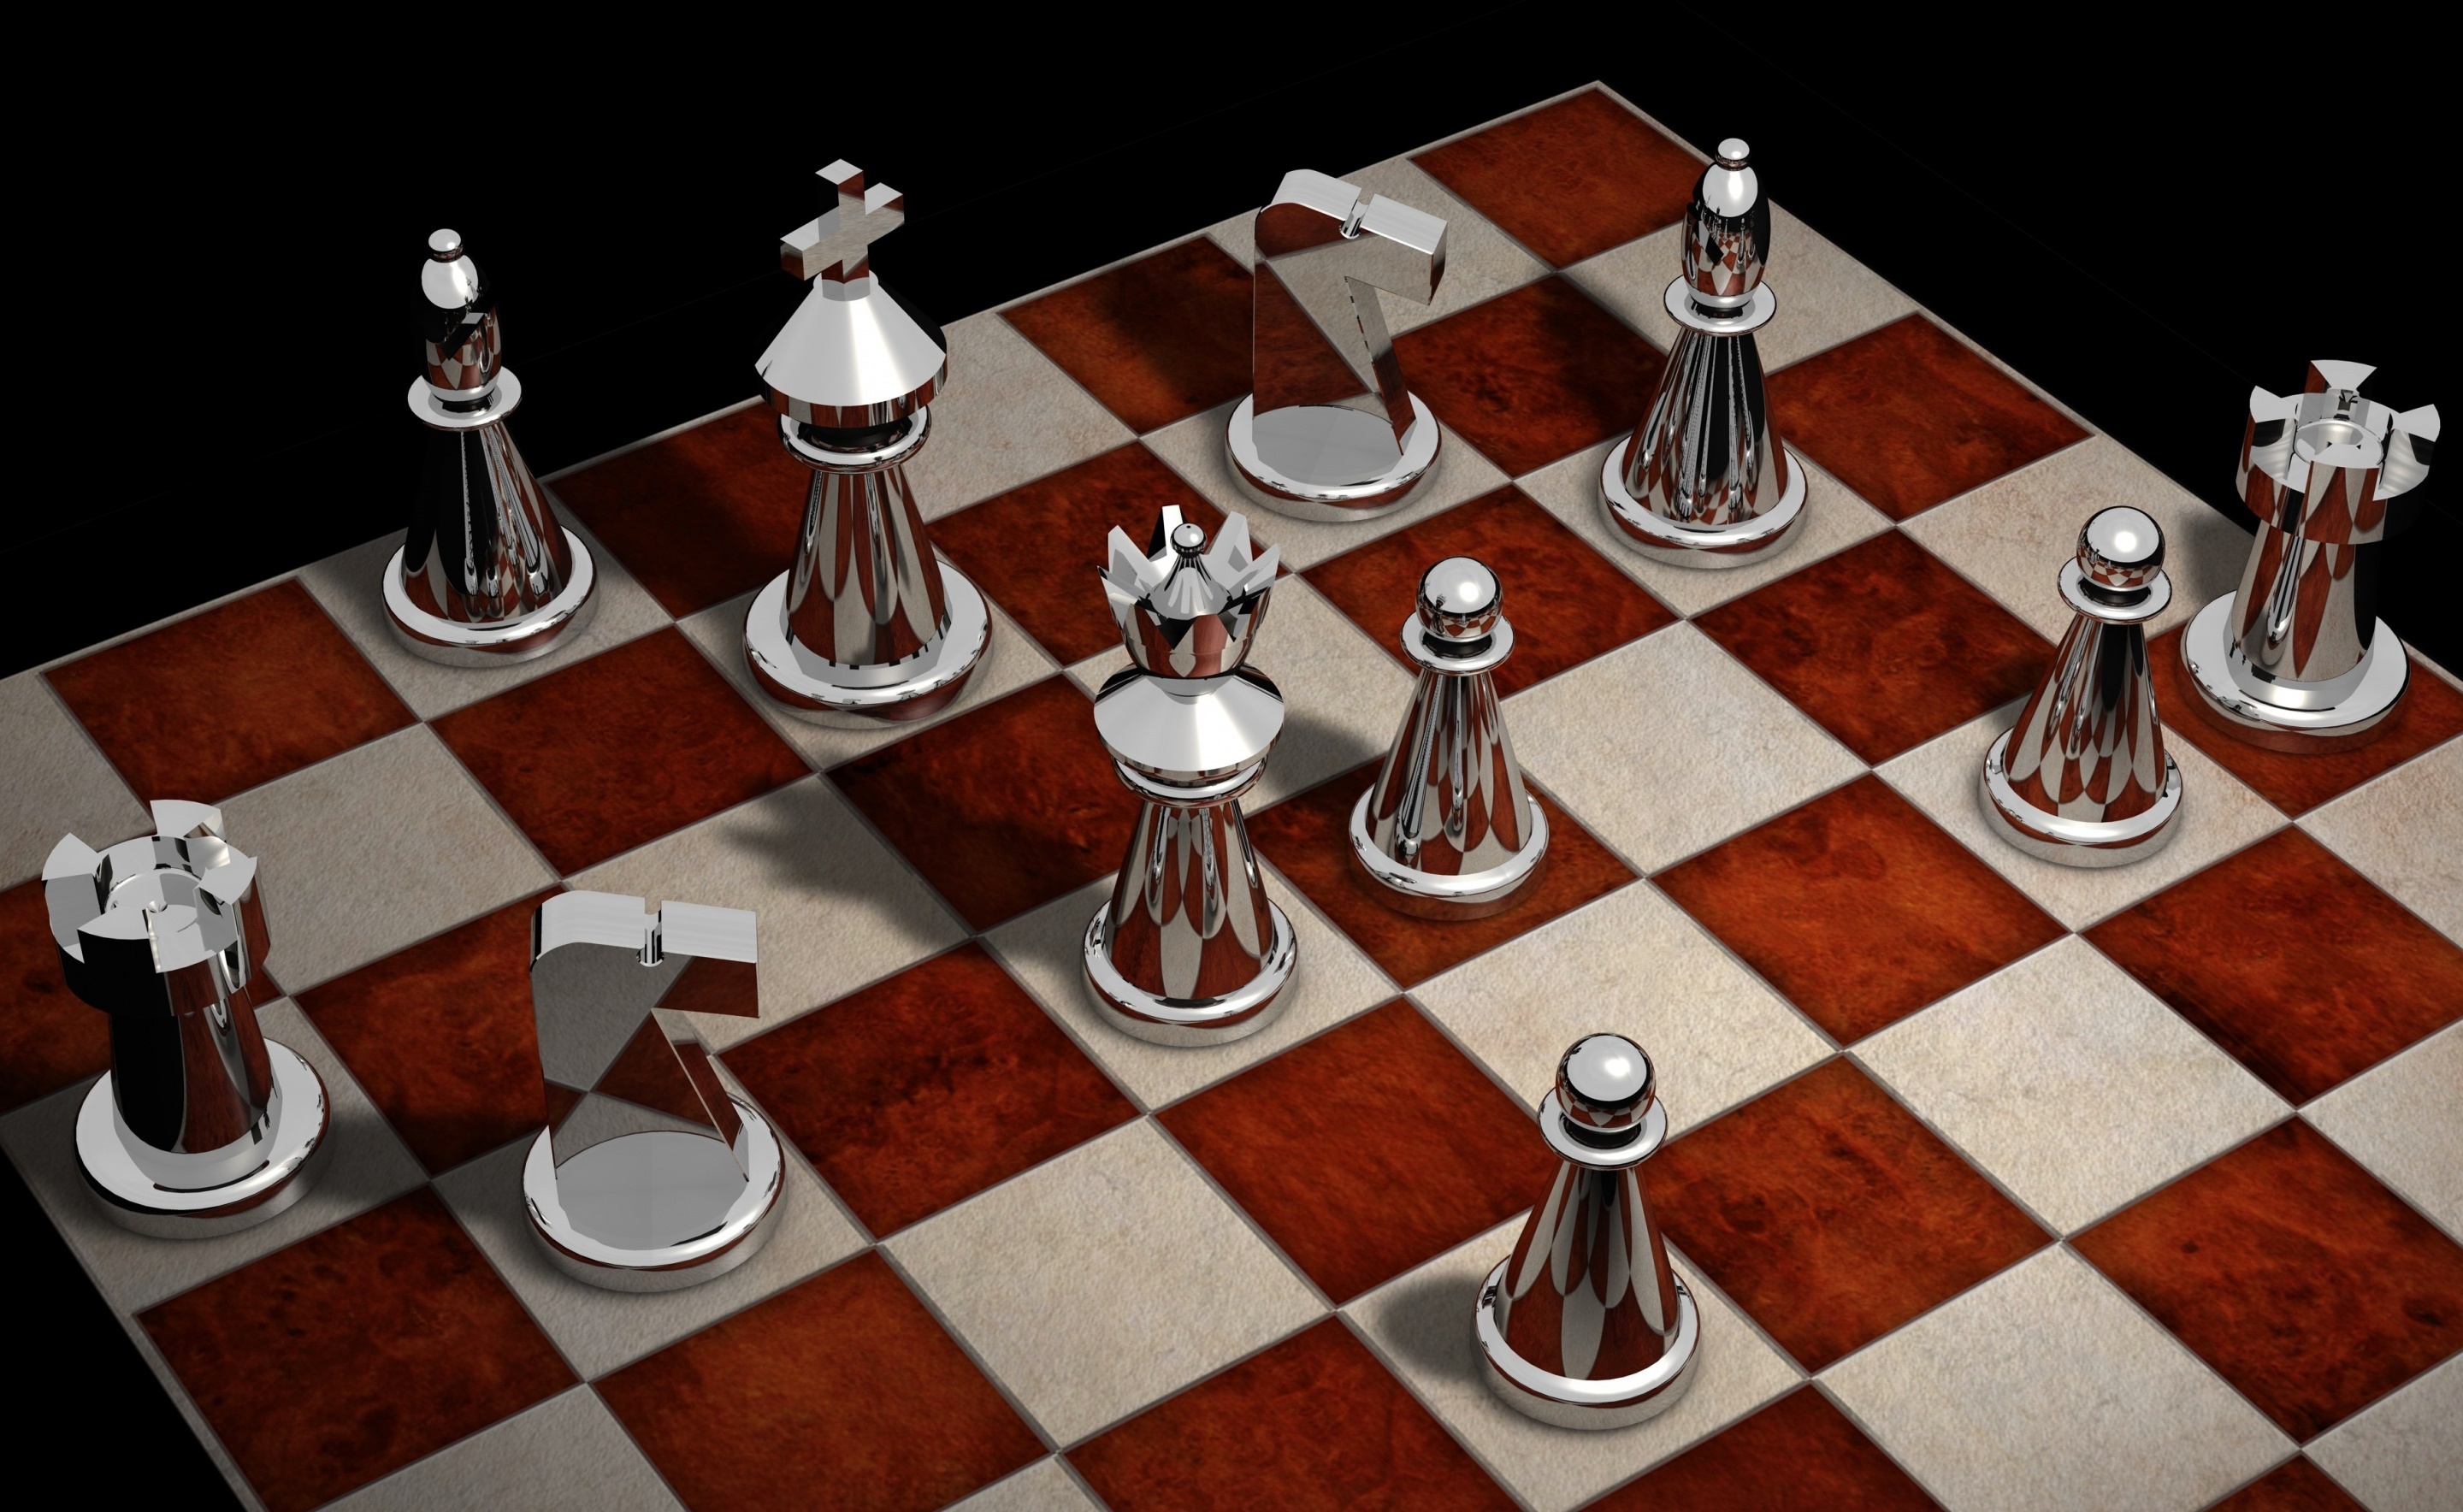 Шахматы 3д на весь экран с компьютером. Игра шахматы Chess. Шахматная доска личесс. Shaxmat doska 3d. 3d шахматы.